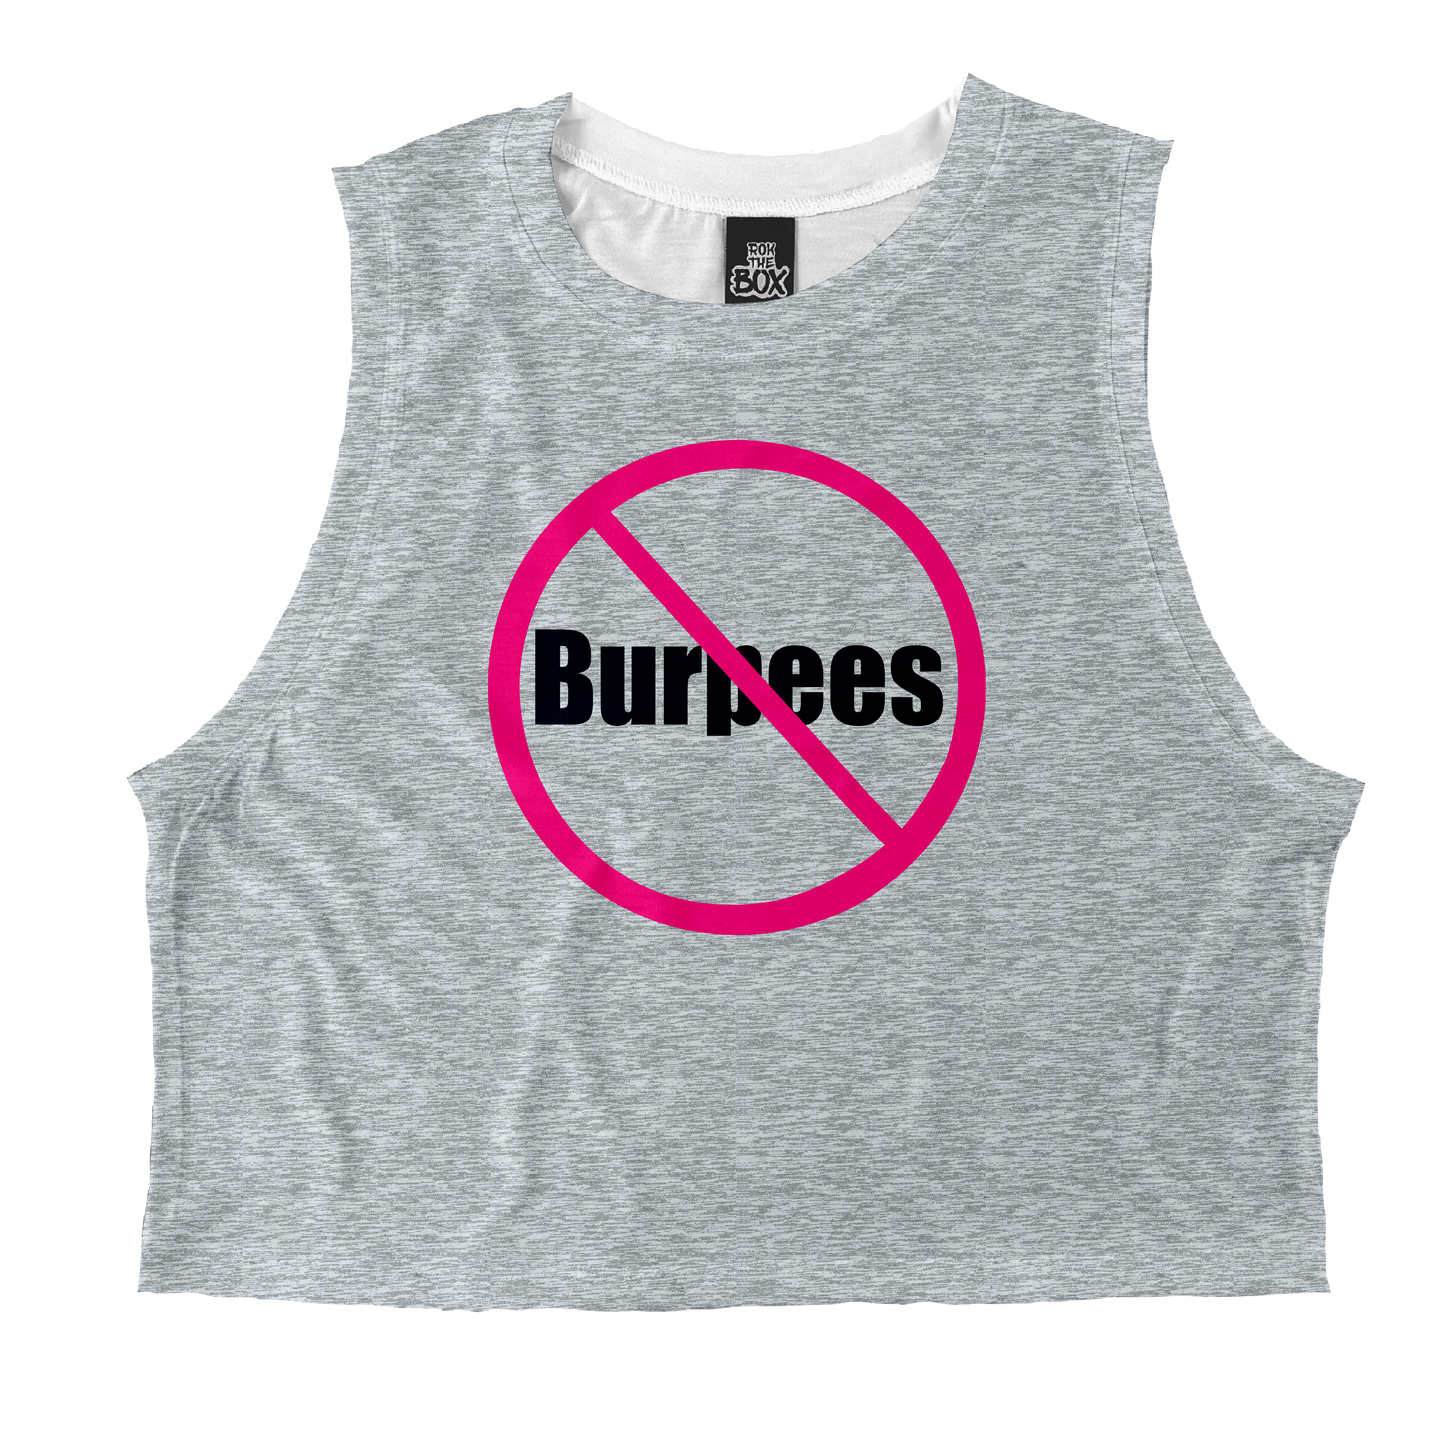 No Burpees Heather RTB Tops